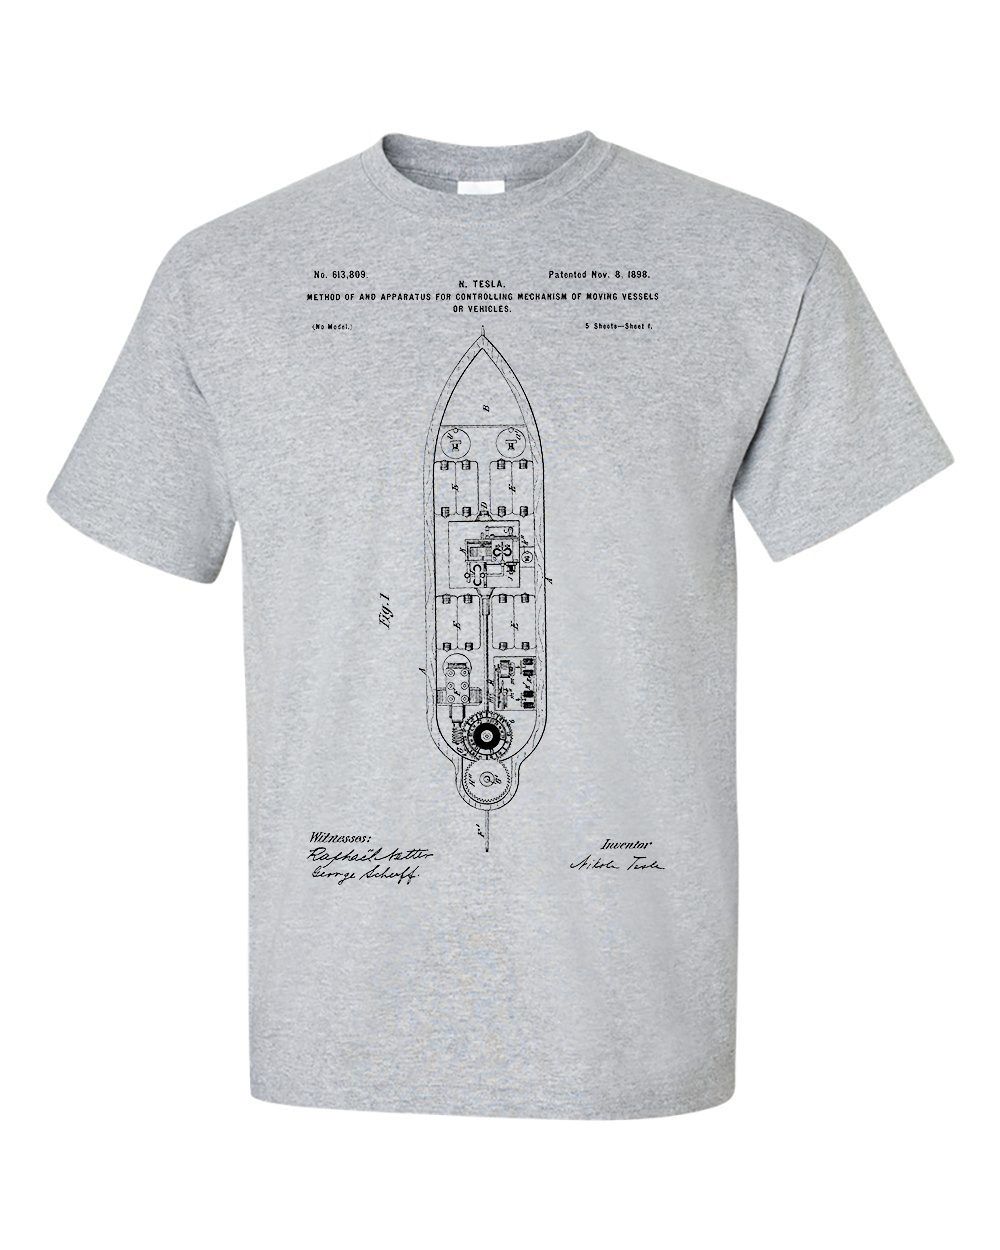 Nikola Tesla Remote Control For Ships and Vehicles Patent Blueprint T-Shirt